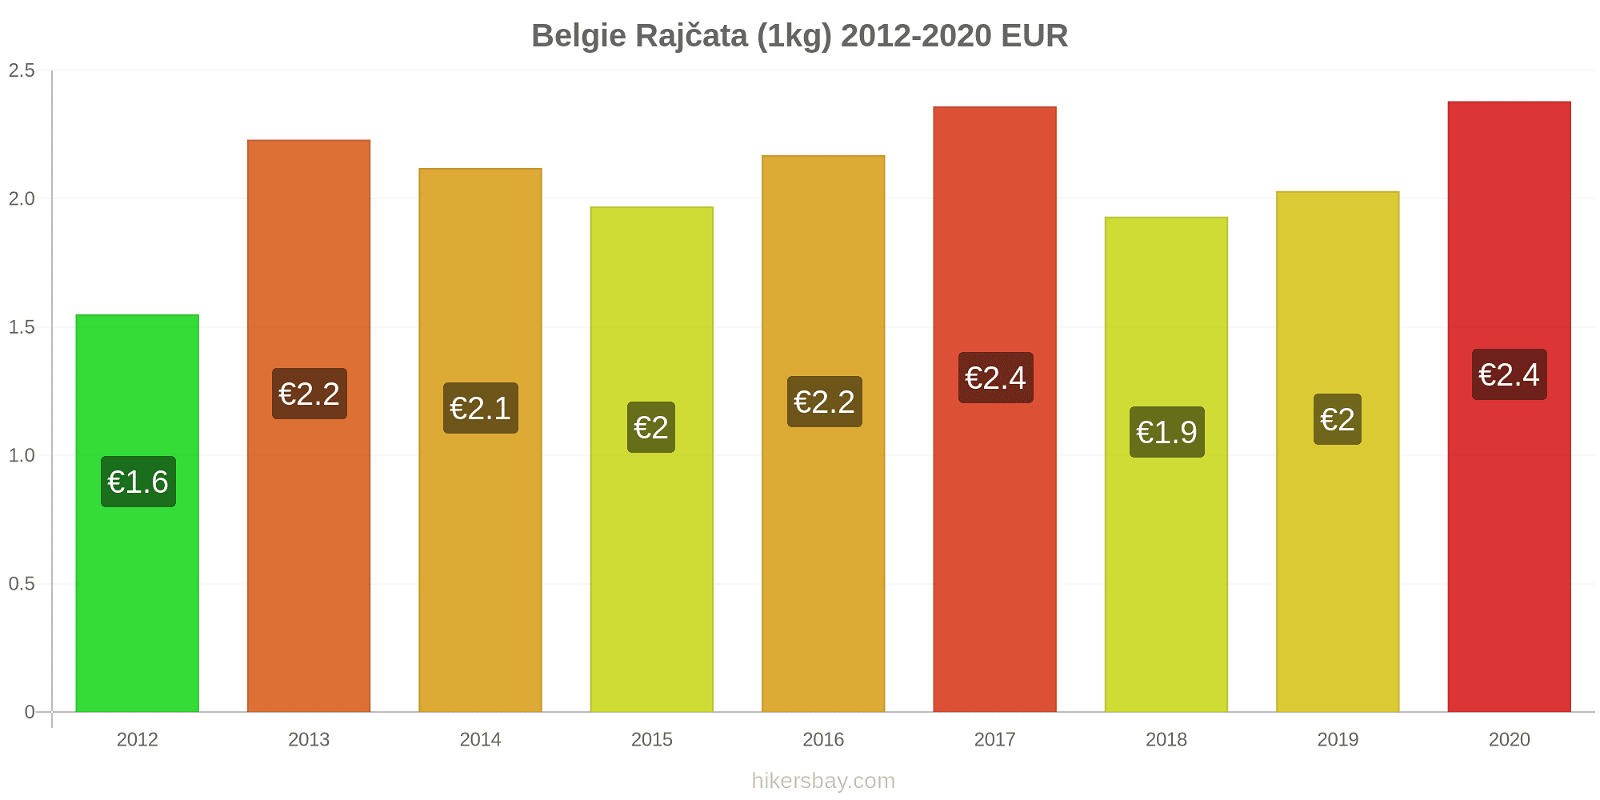 Belgie změny cen Rajčata (1kg) hikersbay.com